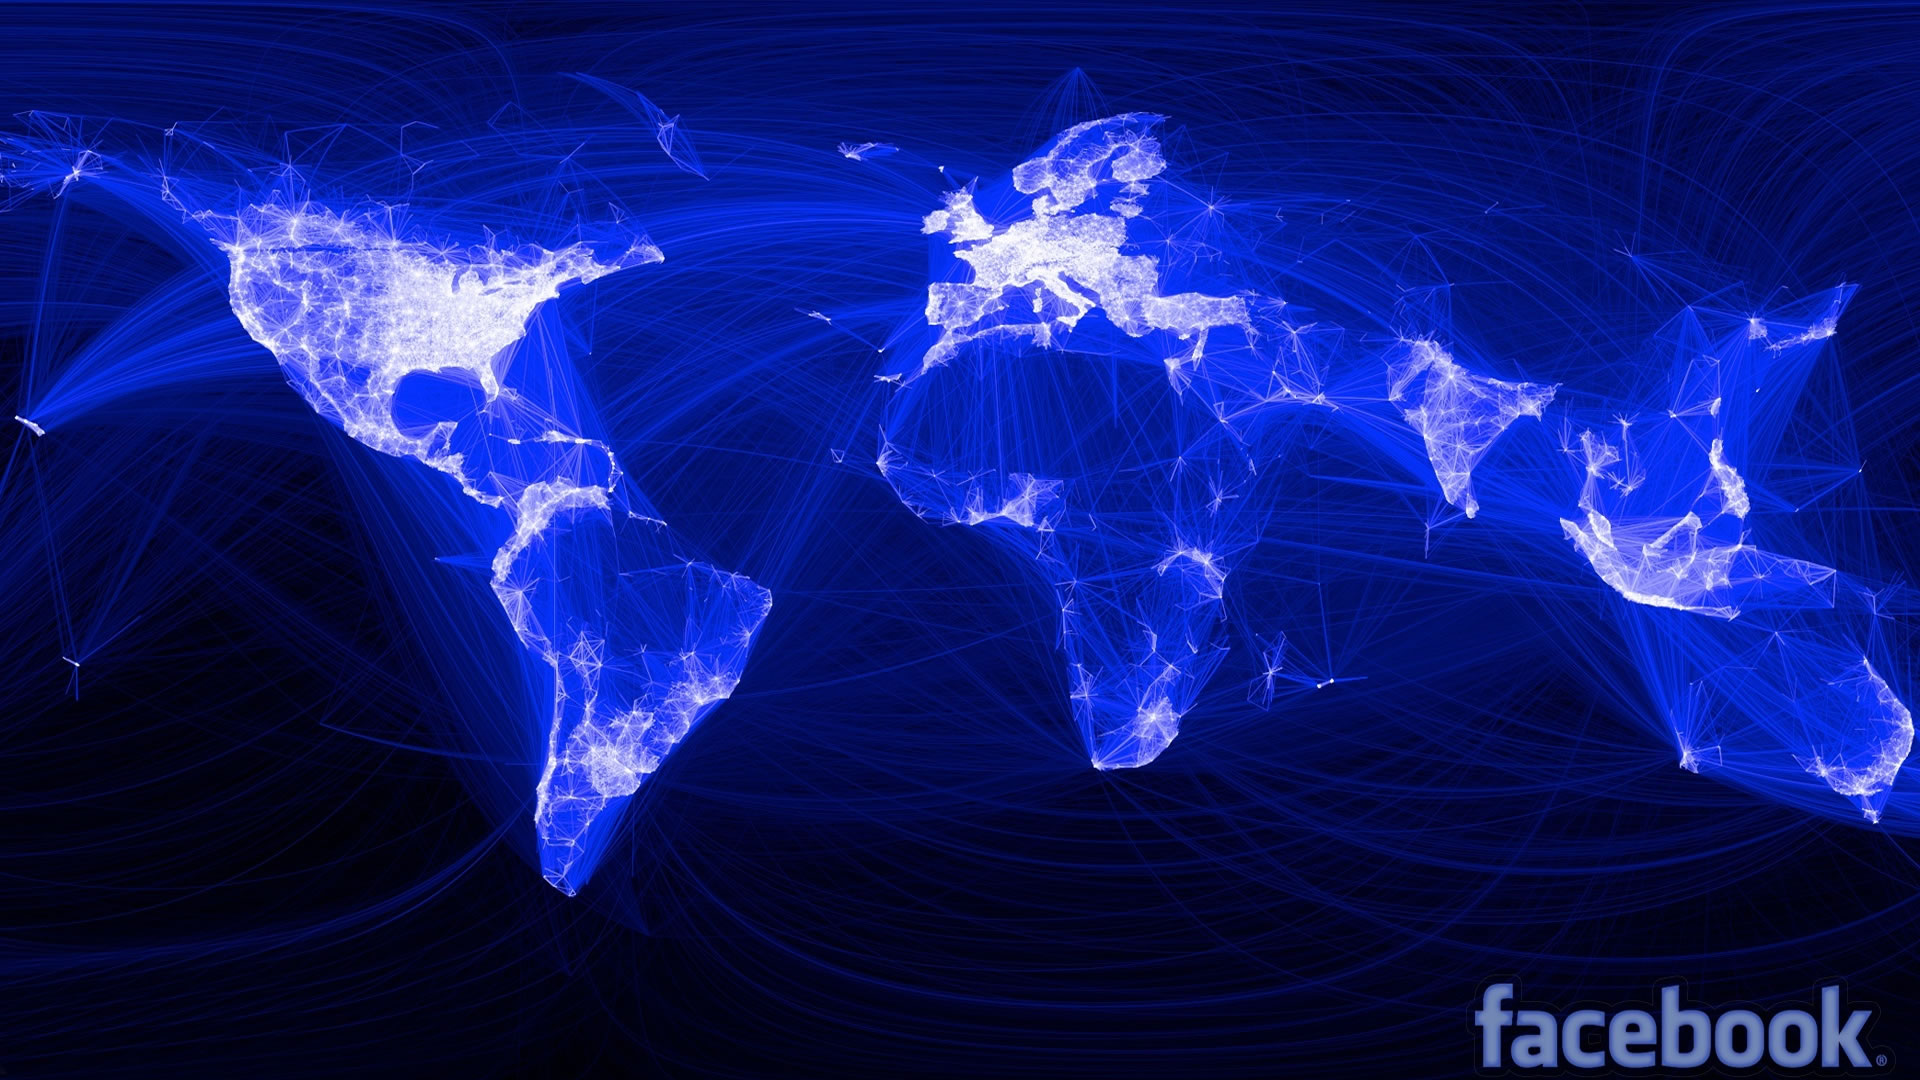 The world as seen through Facebook use in 2010.